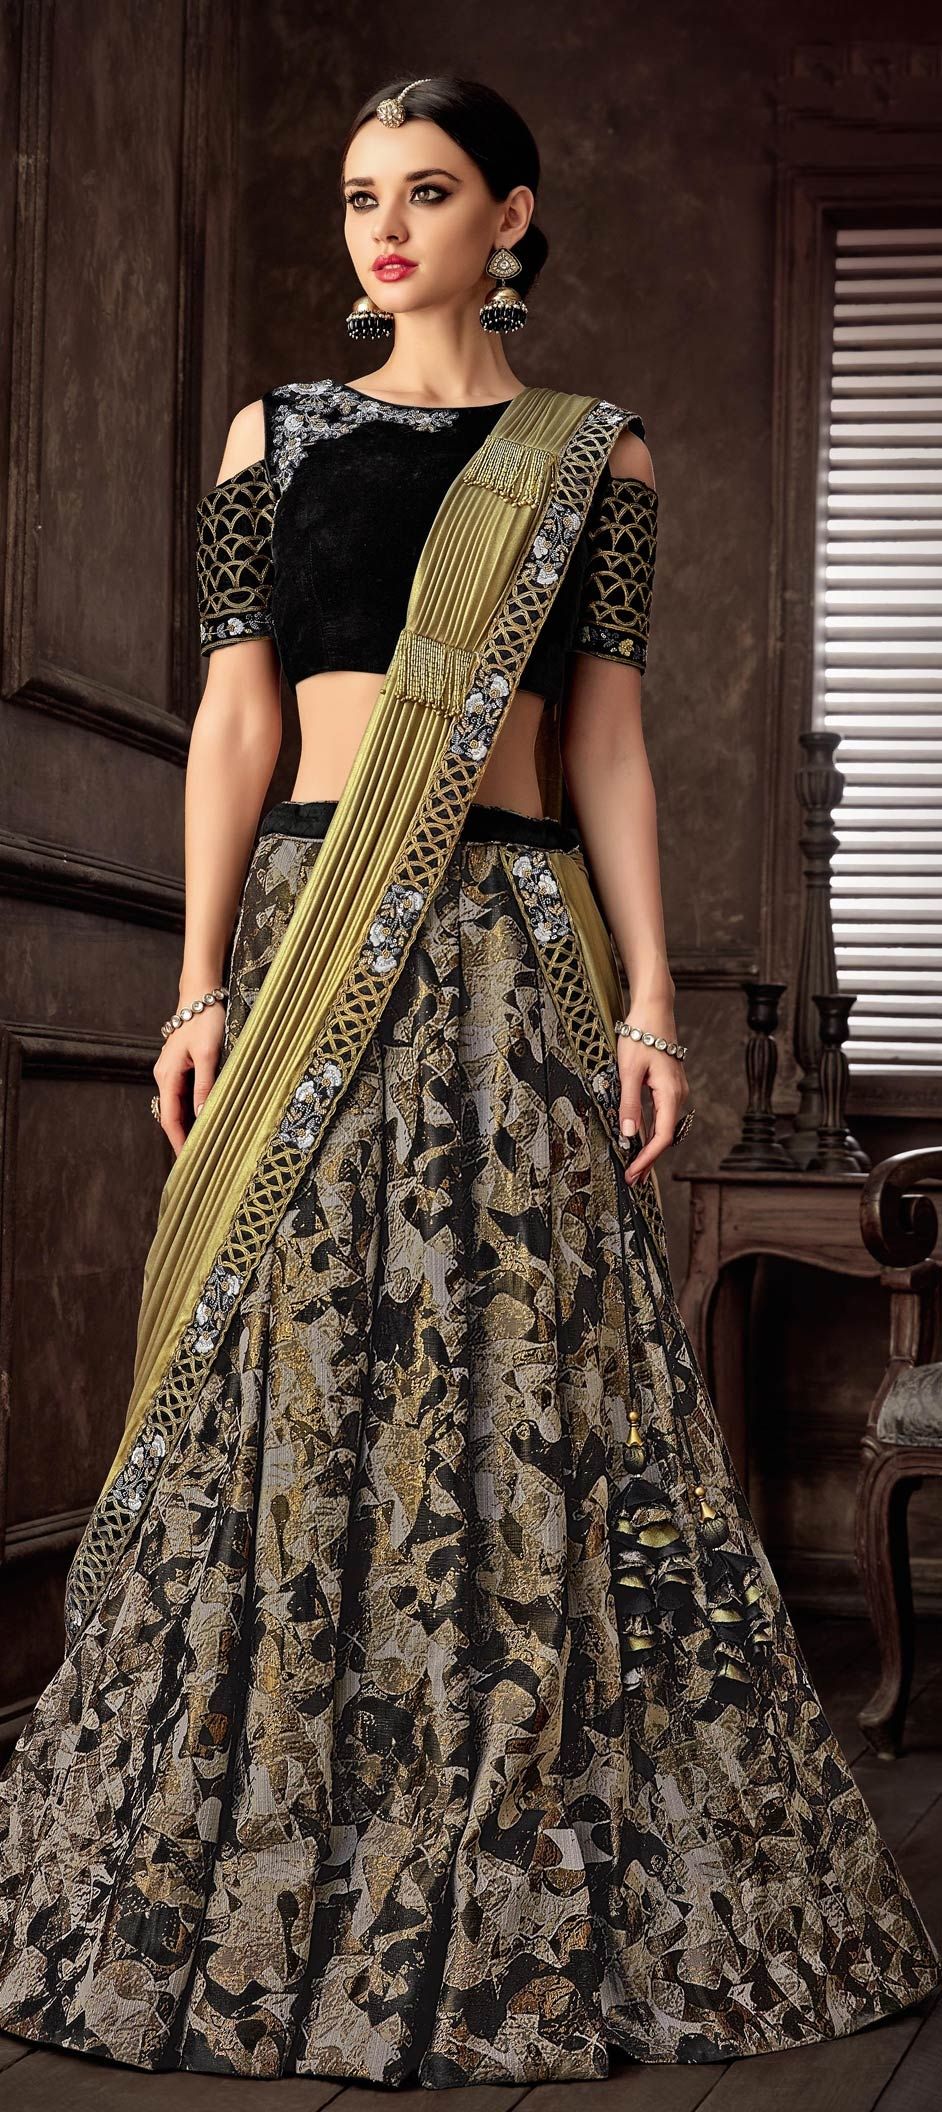 Buy Pink Banarasi Silk Lehenga Style Saree | Lehenga style Sarees